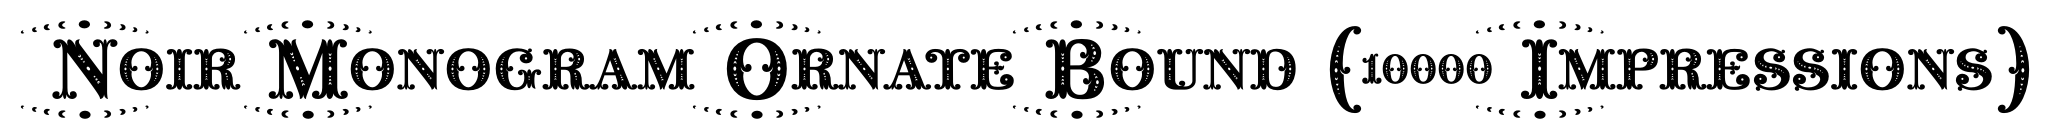 Noir Monogram Ornate Bound (10000 Impressions) image